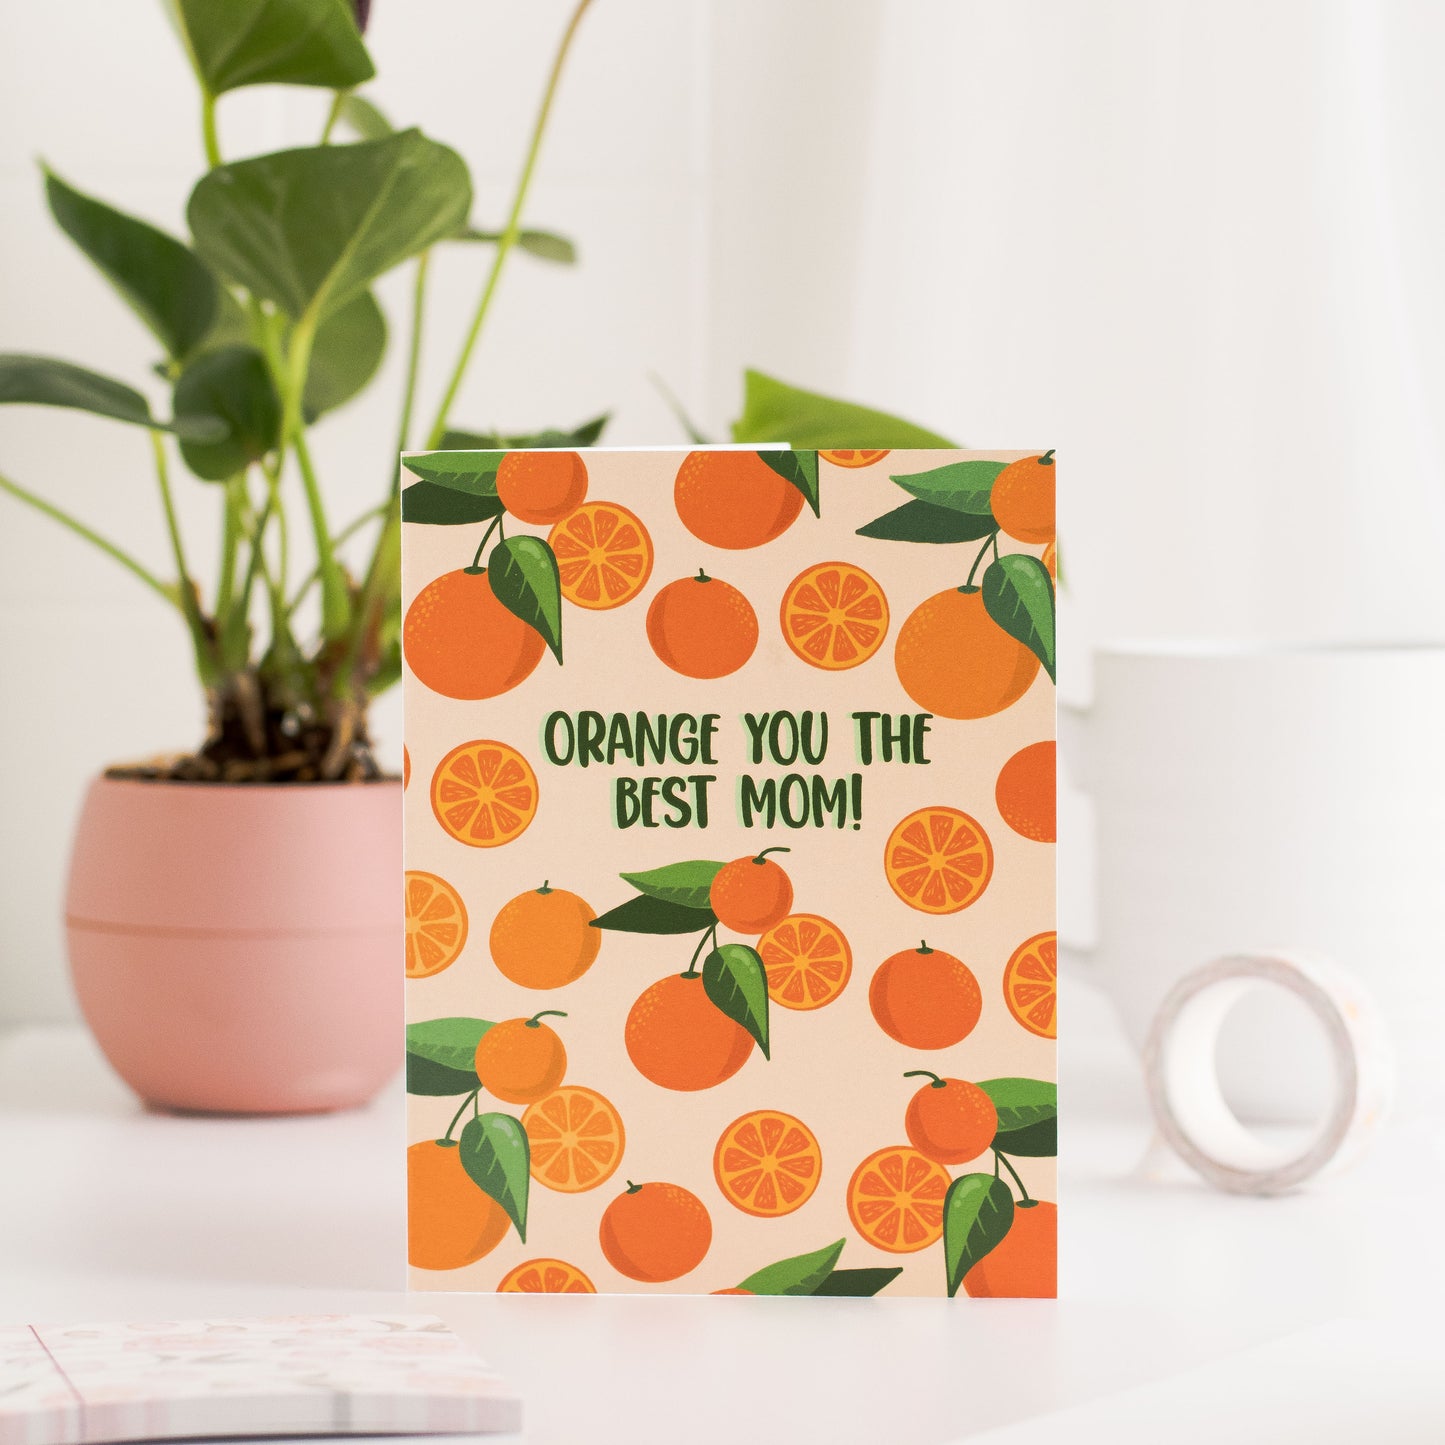 Orange You The Best Mom! - Greeting Card